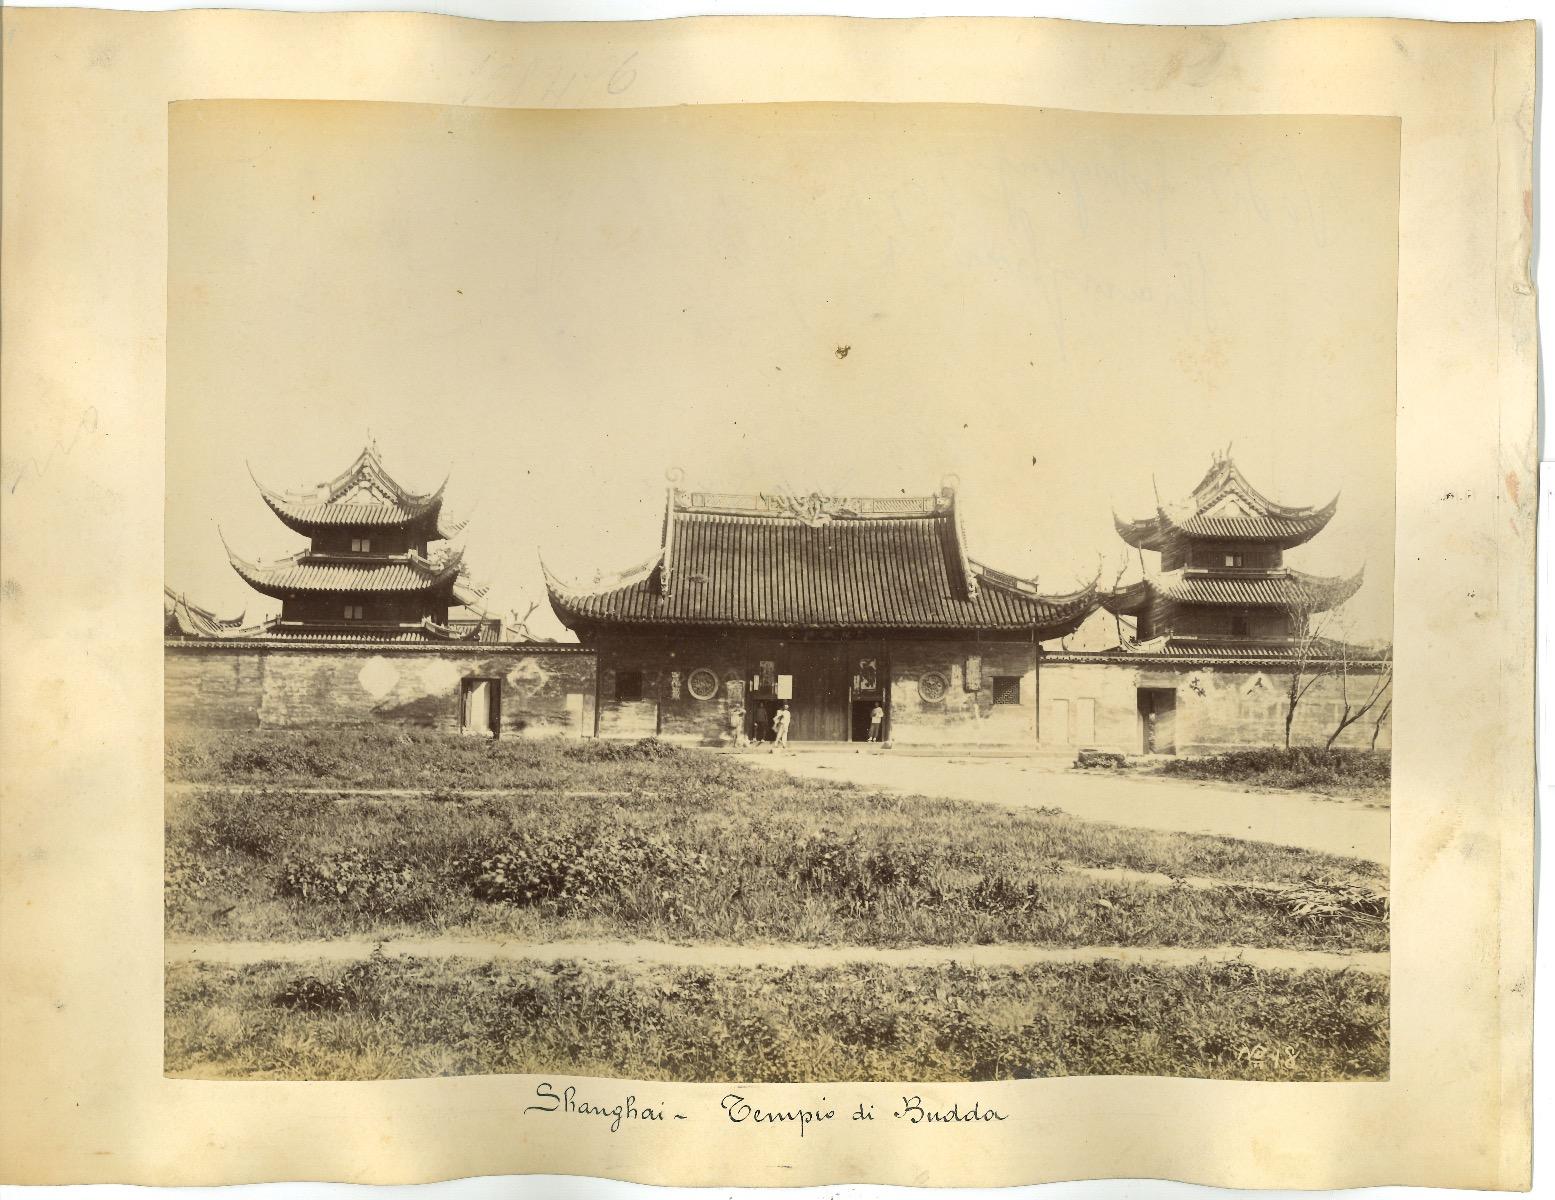 Unknown Figurative Photograph - Ancient Views of Shanghai - Buddha temple - Original Albumen Print - 1890s